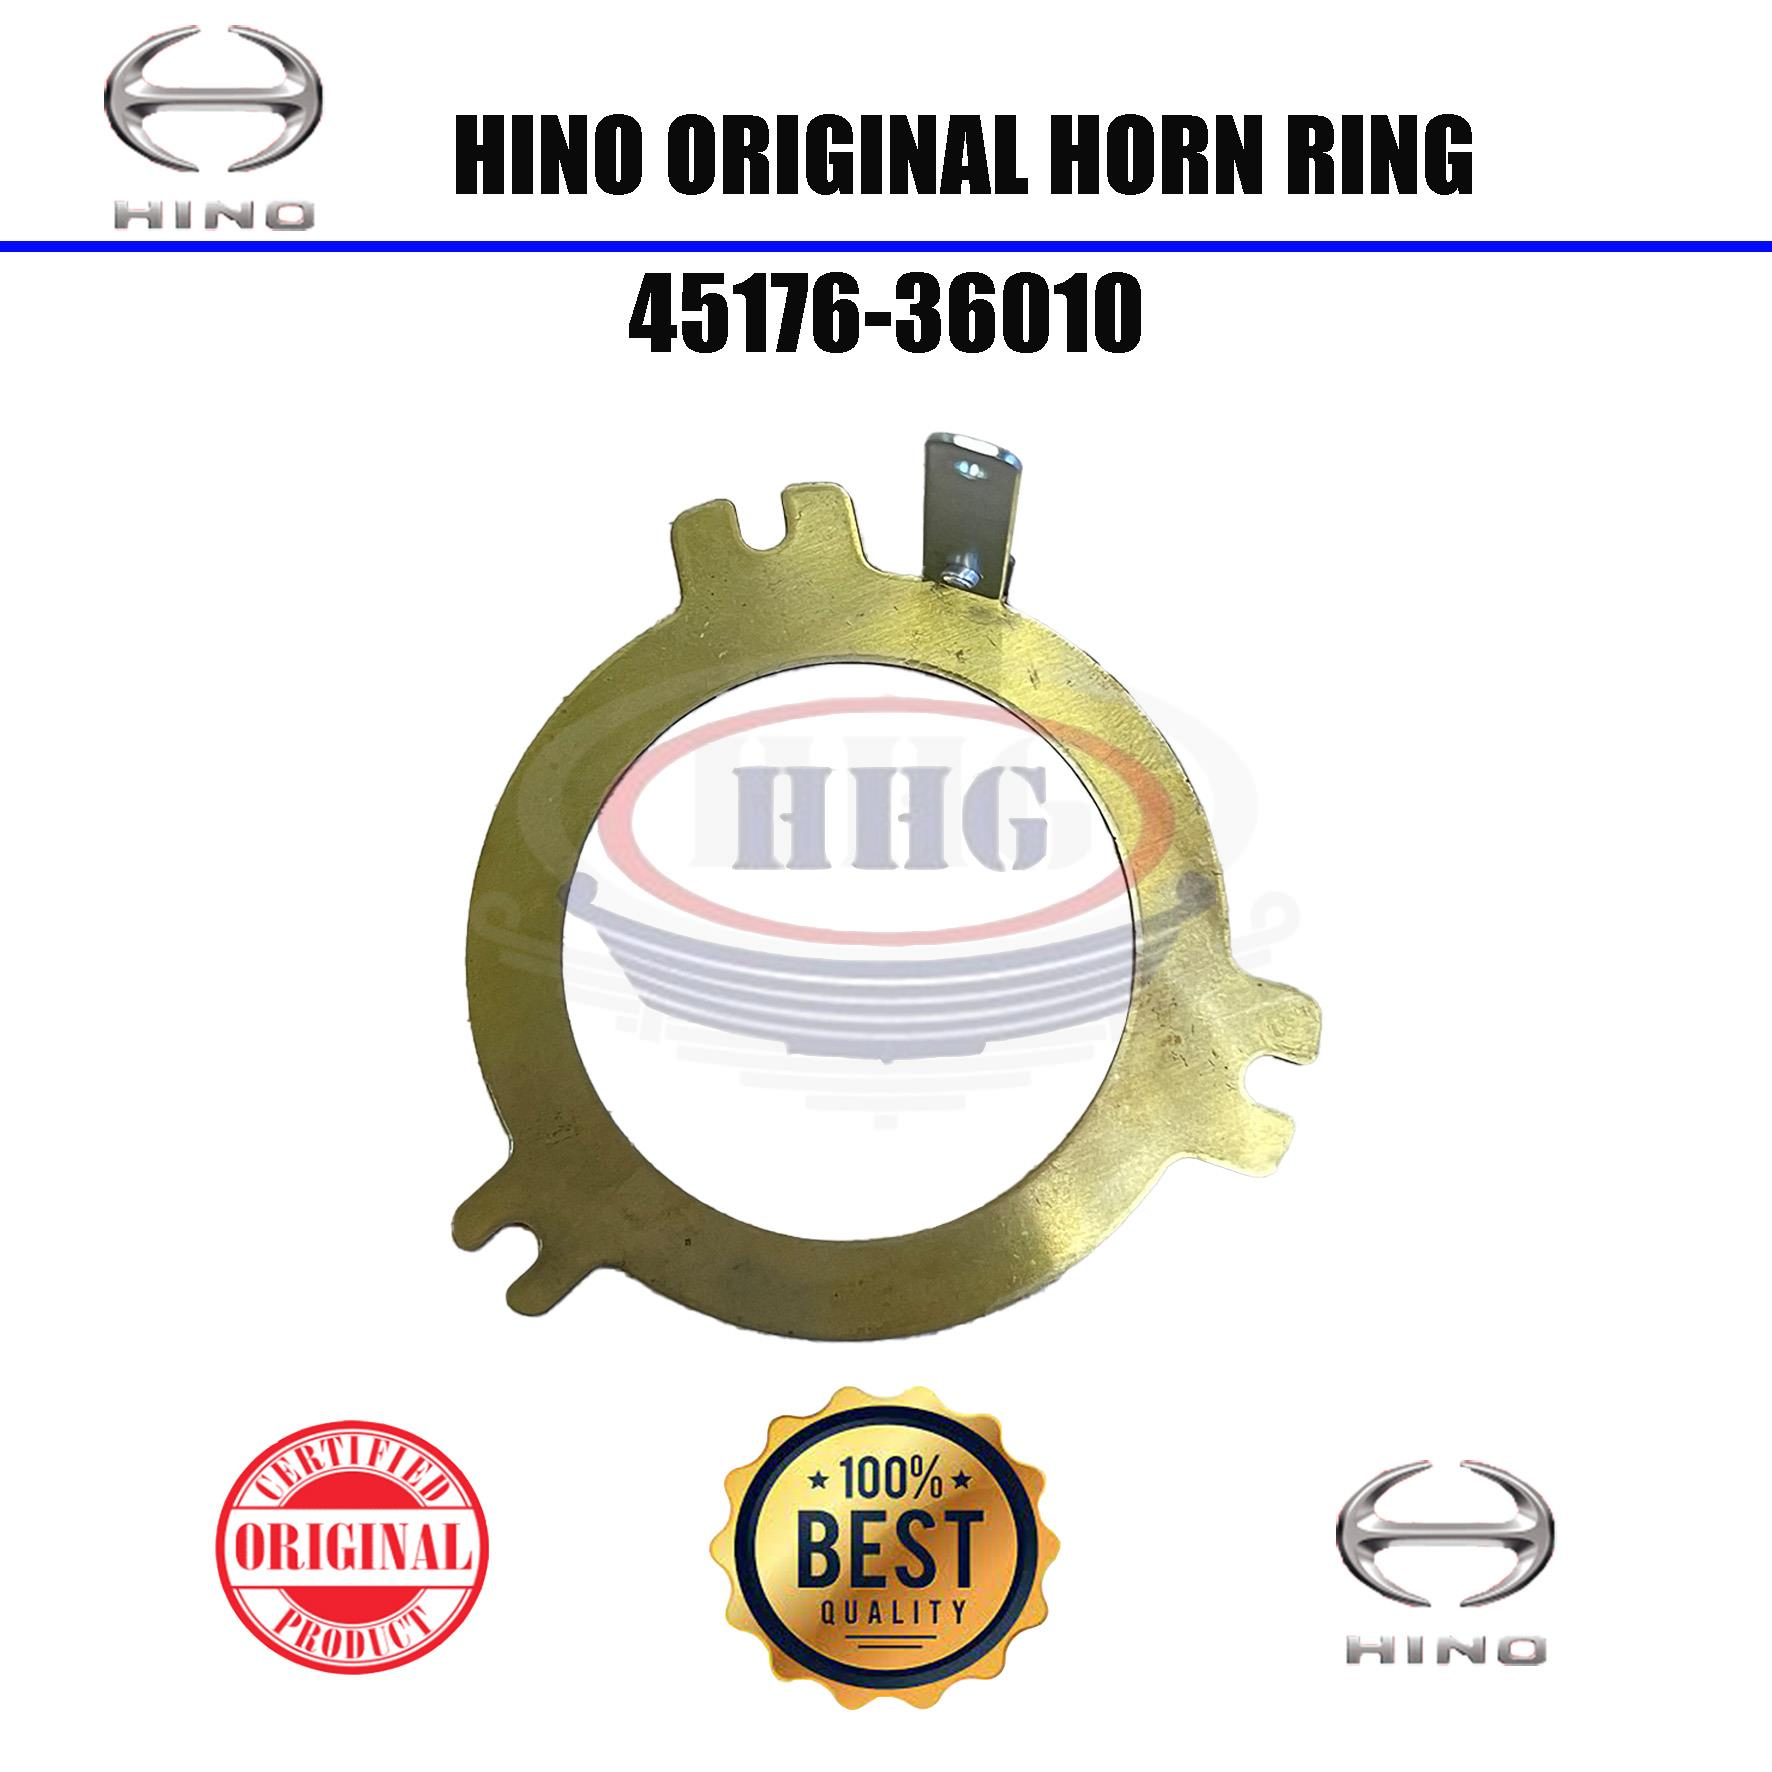 Hino Original Horn Ring (45176-36010)